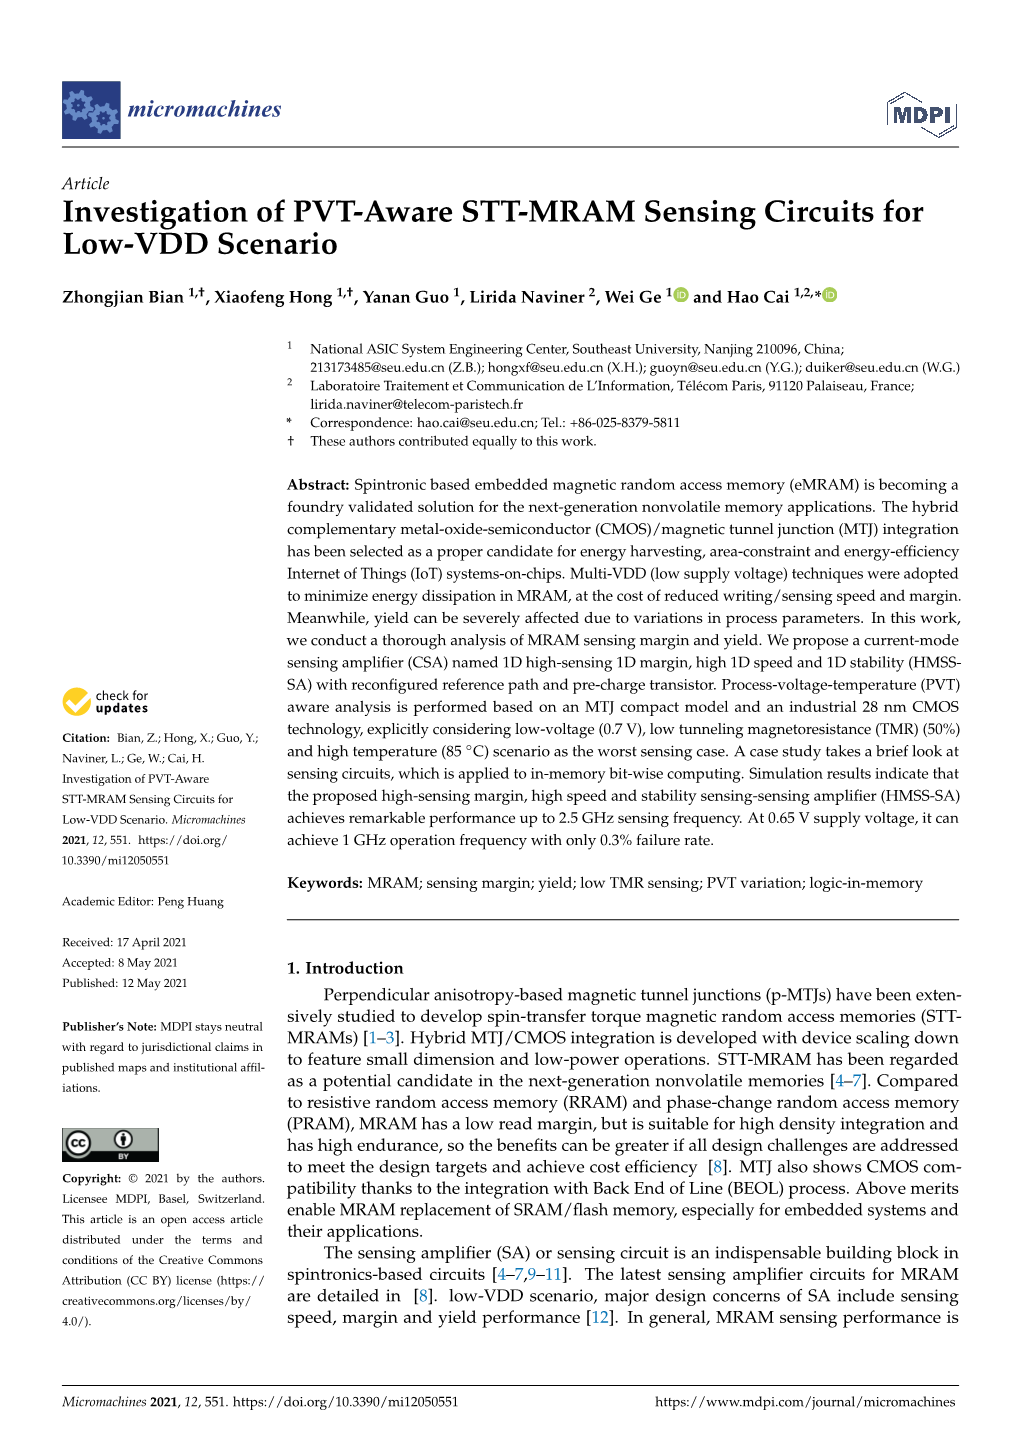 Investigation of PVT-Aware STT-MRAM Sensing Circuits for Low-VDD Scenario